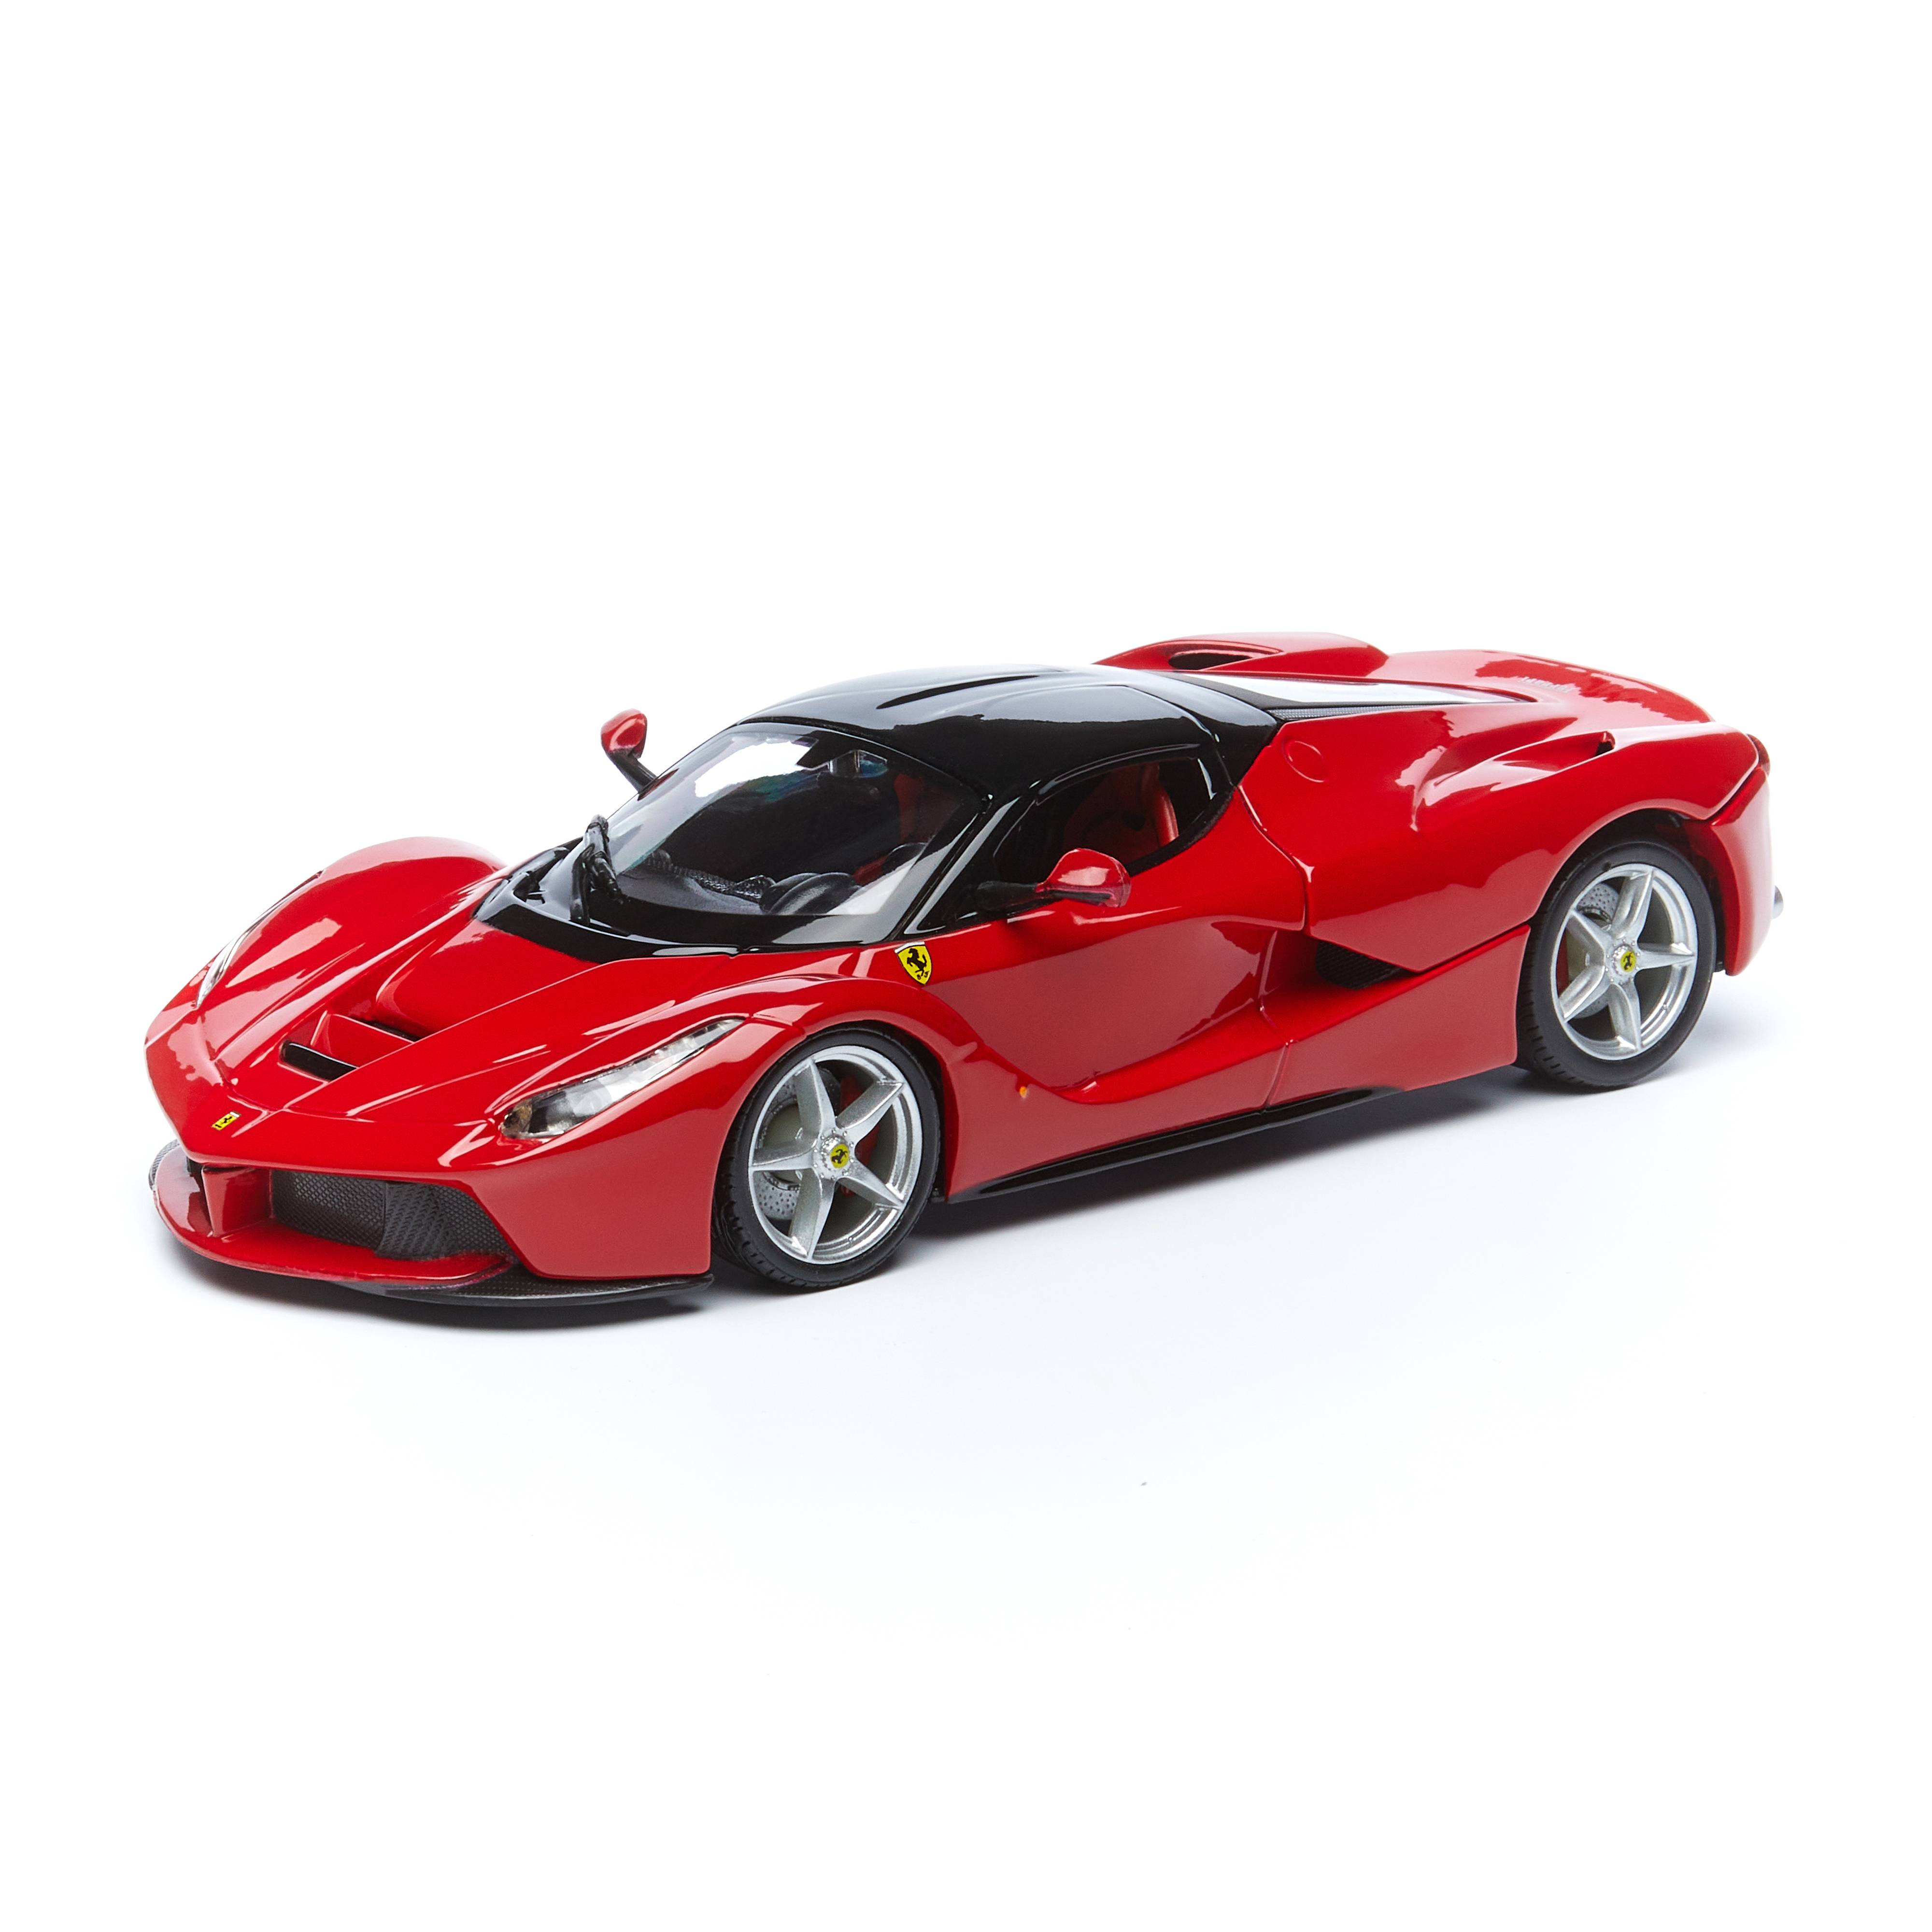 Машинка Maisto сборная, красная - Ferrari LaFerrari 1:24 машинка сборная металлическая maisto kit 1 24 ferrari monza sp1 39140